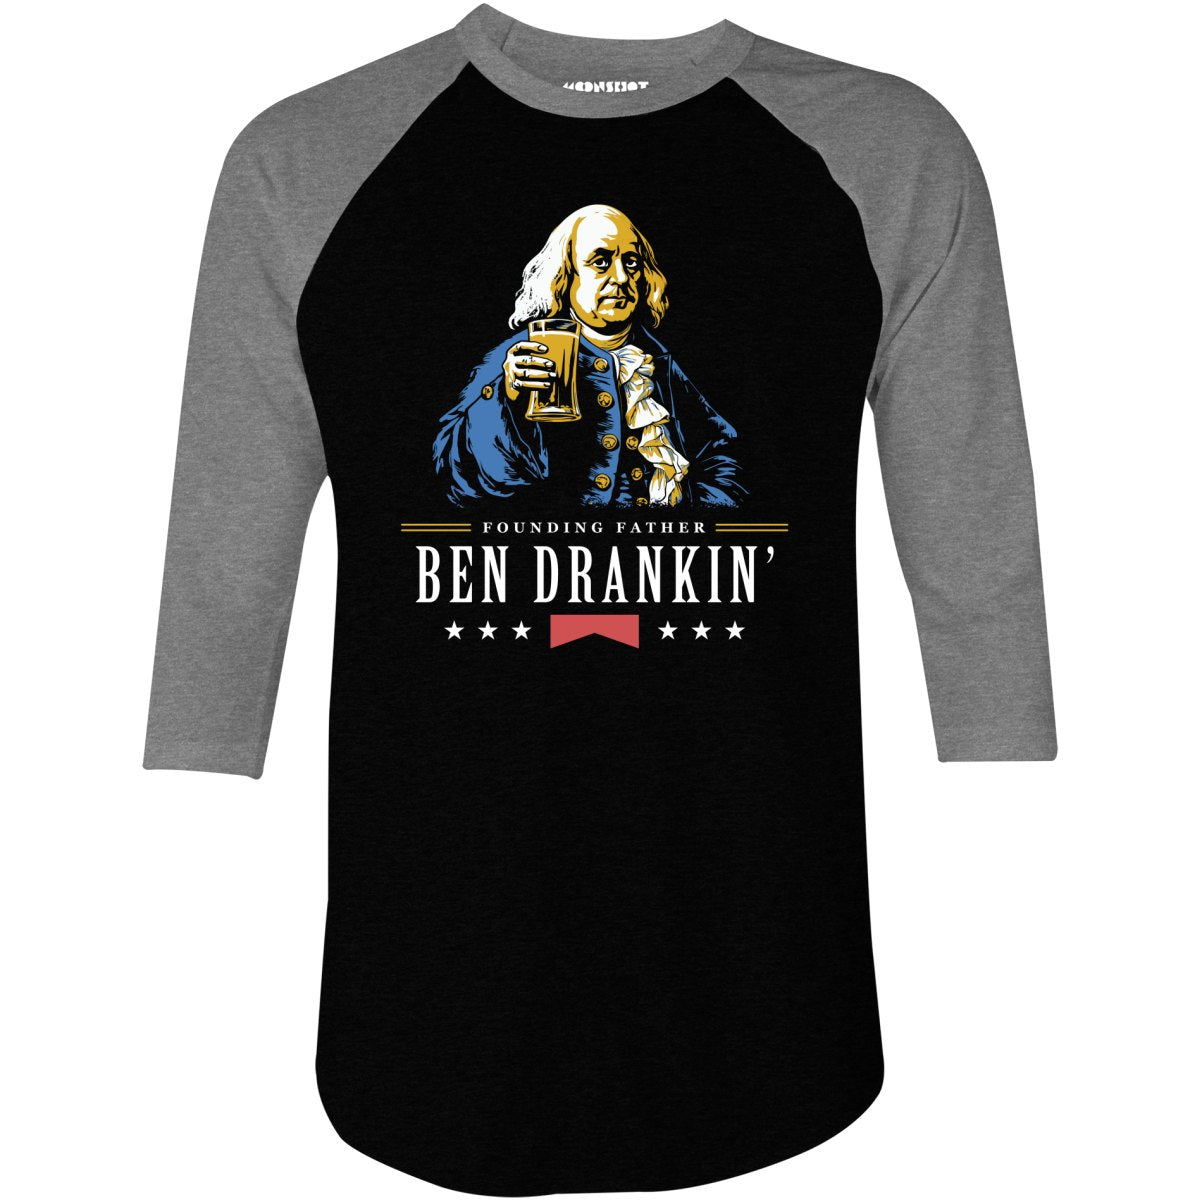 Ben Drankin' Founding Father - 3/4 Sleeve Raglan T-Shirt